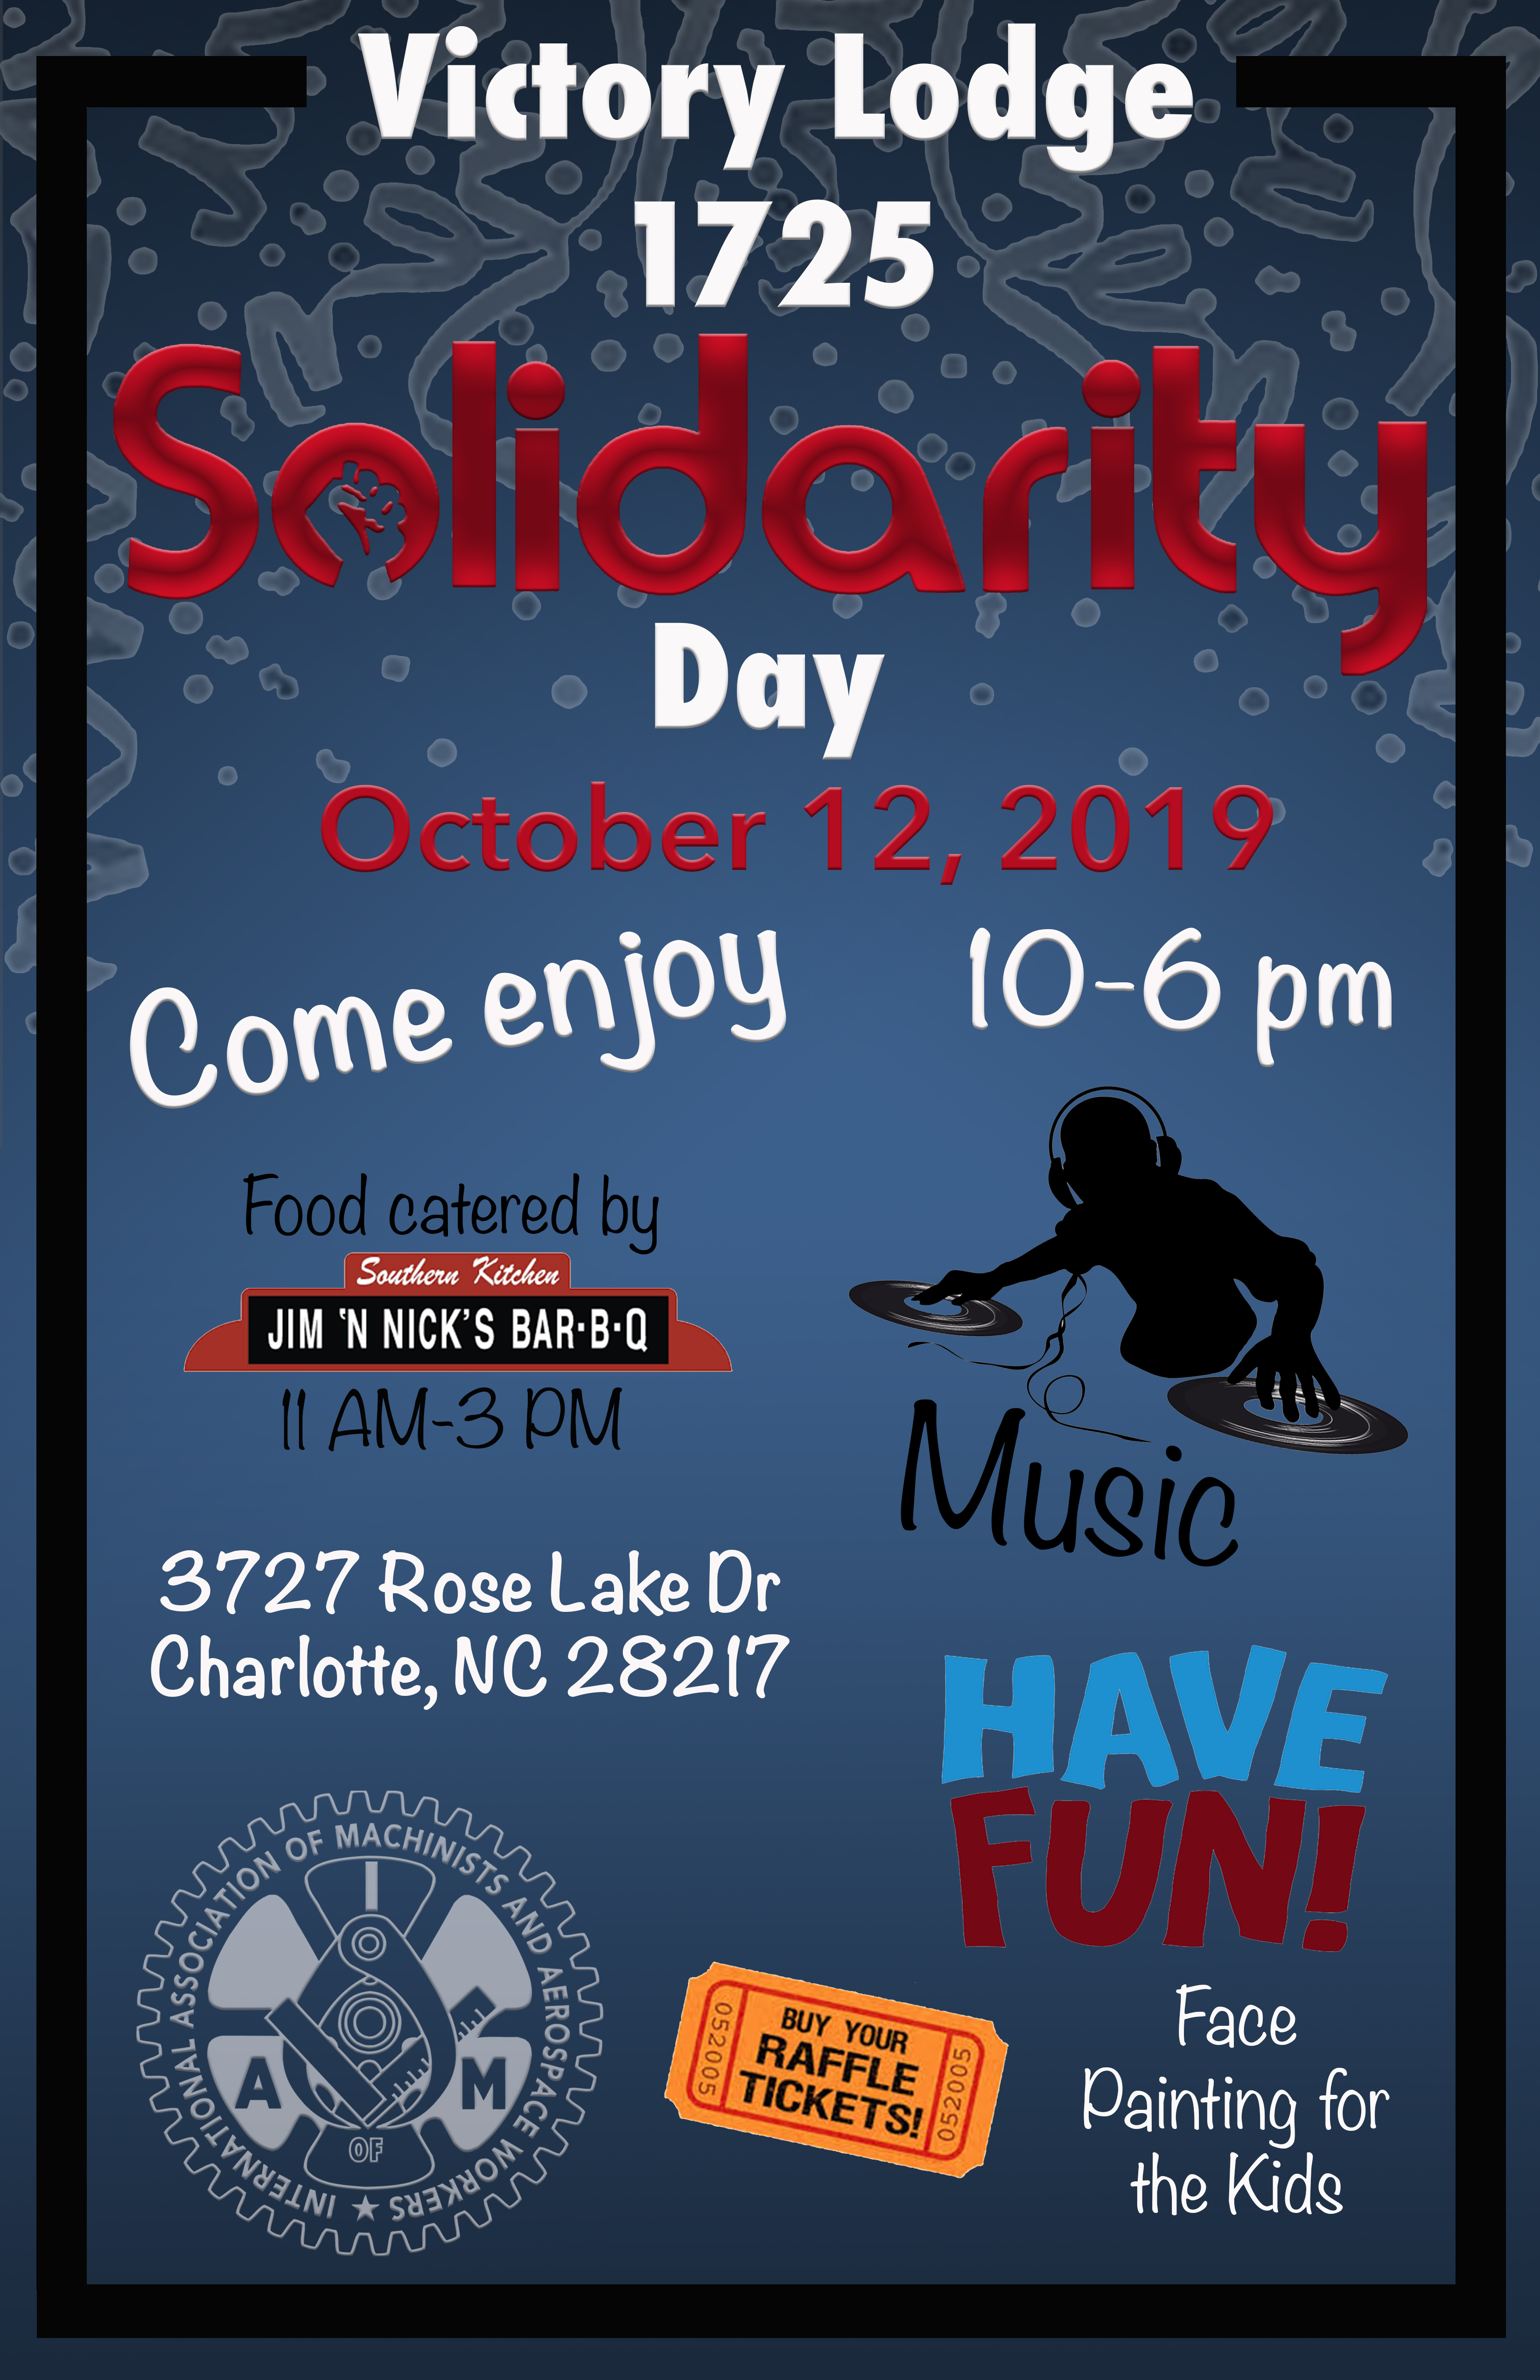 Reminder: Solidarity Day October 12 at the Local Lodge!